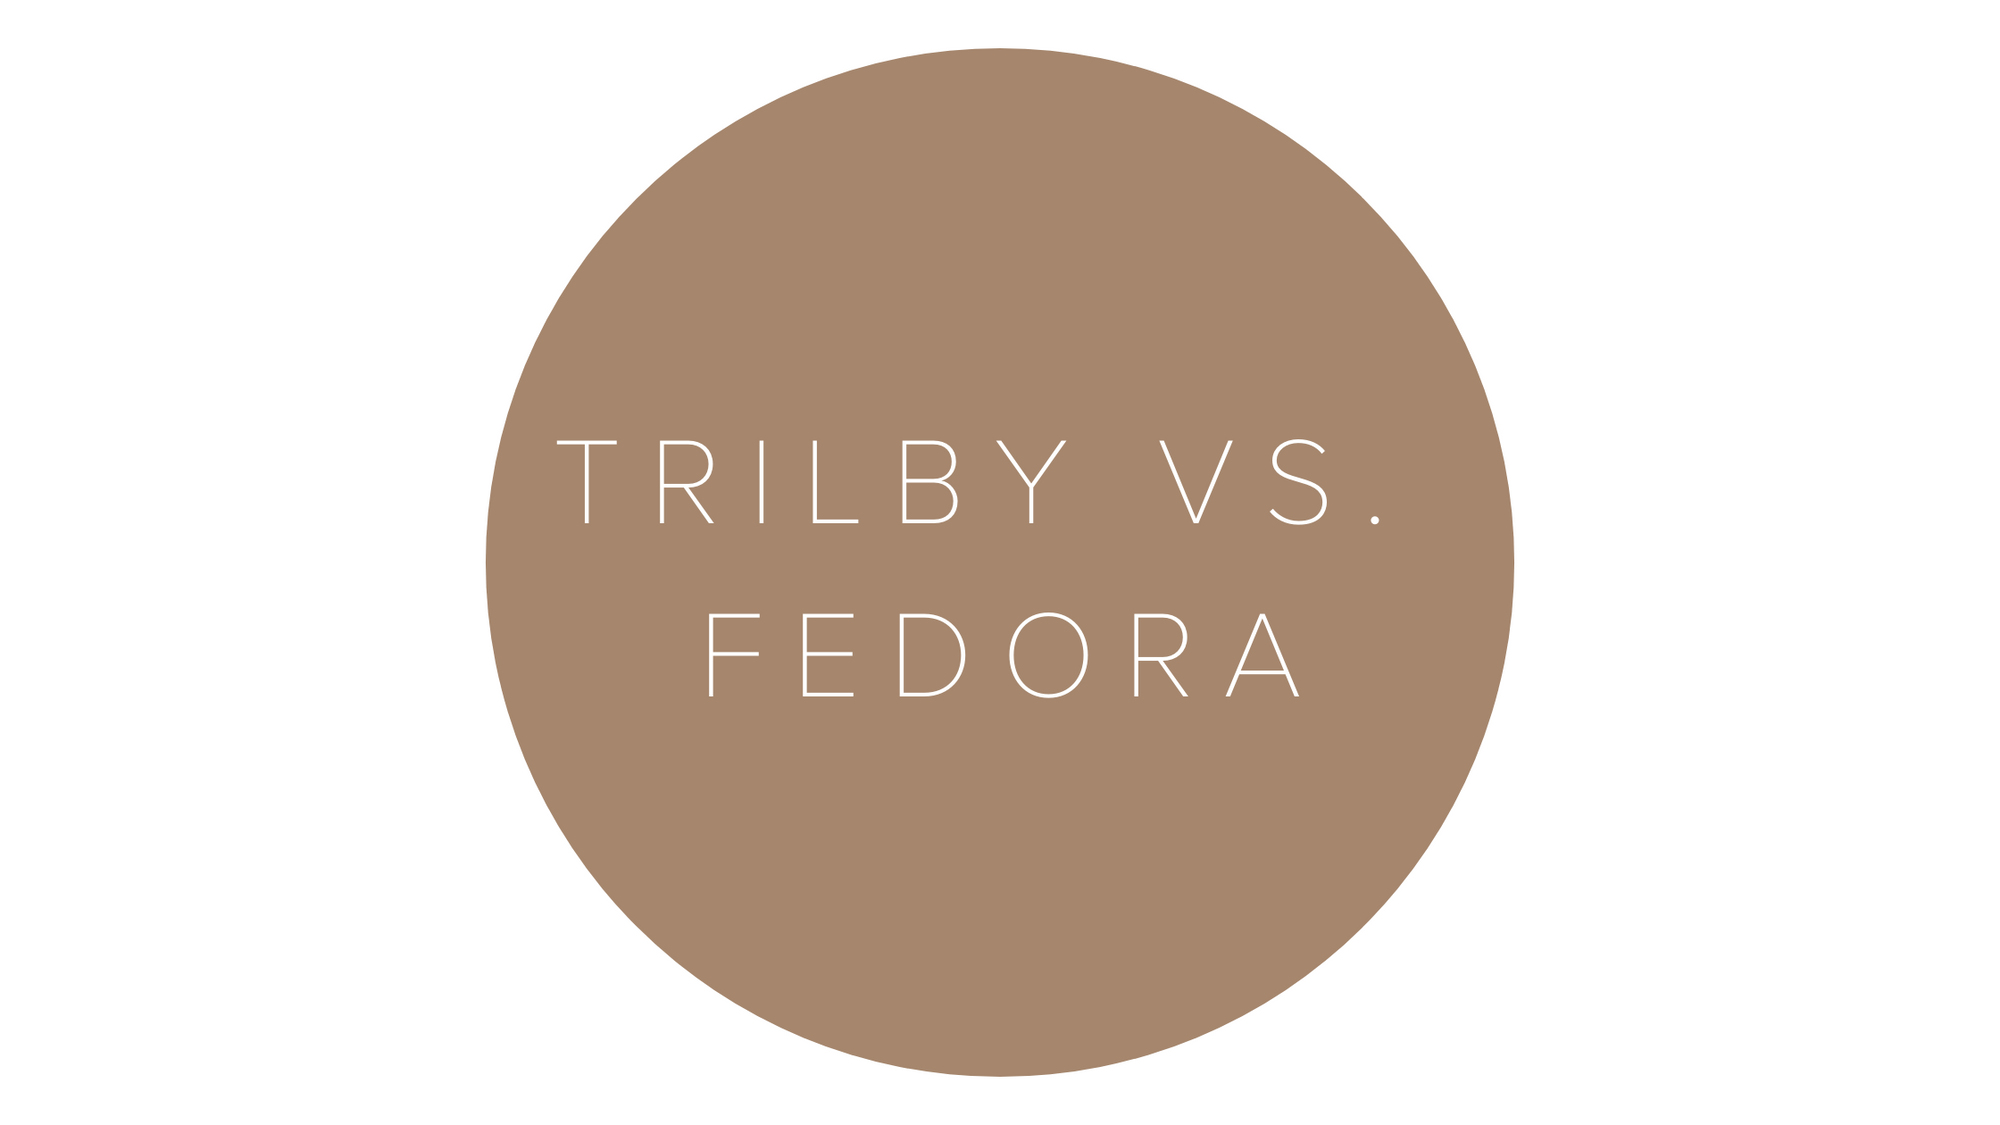 tribly vs fedora